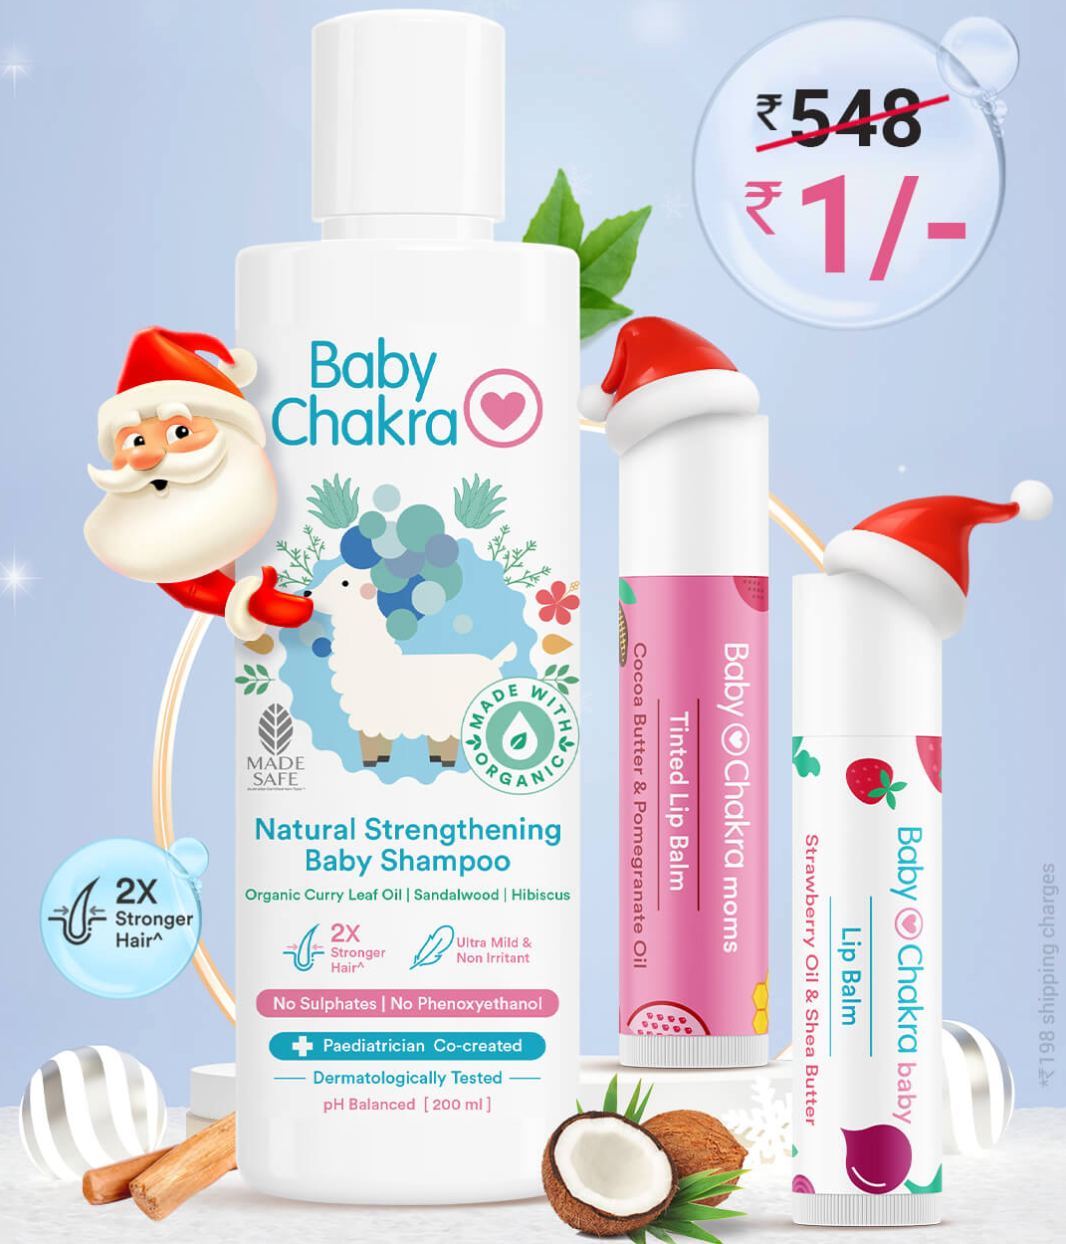 Free Cosmetic Sample From BabyChakra